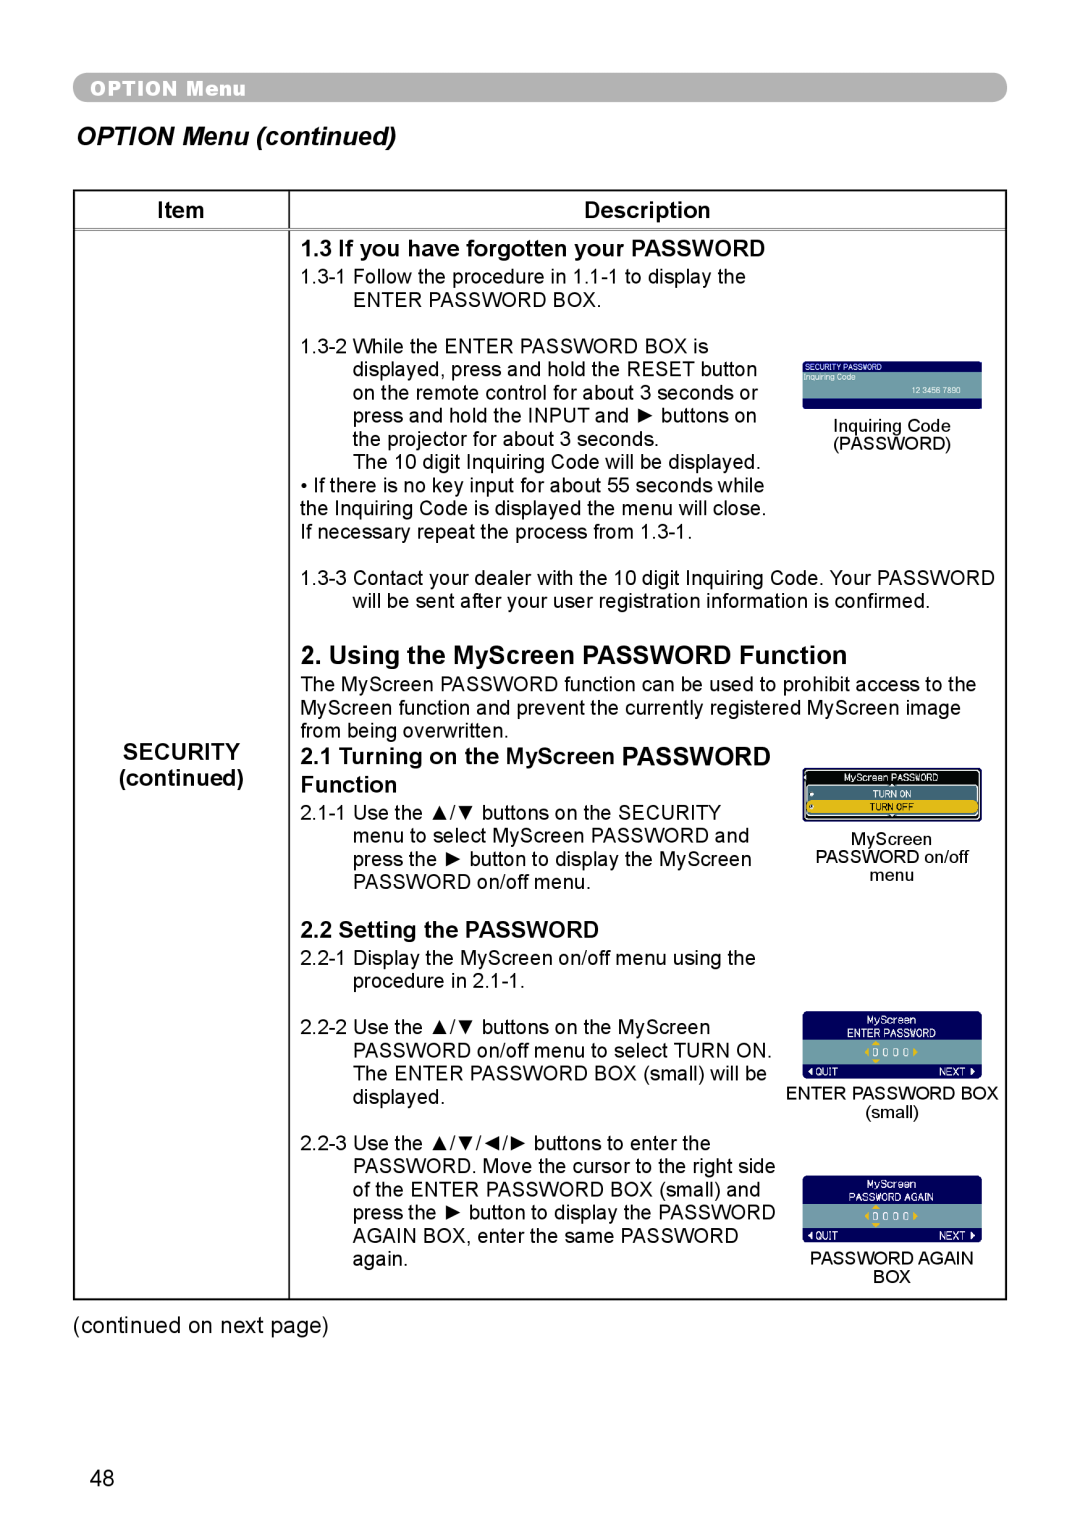 Planar PR9020 Using the MyScreen PASSWORD Function, OPTION Menu continued, Description, Security, Setting the PASSWORD 